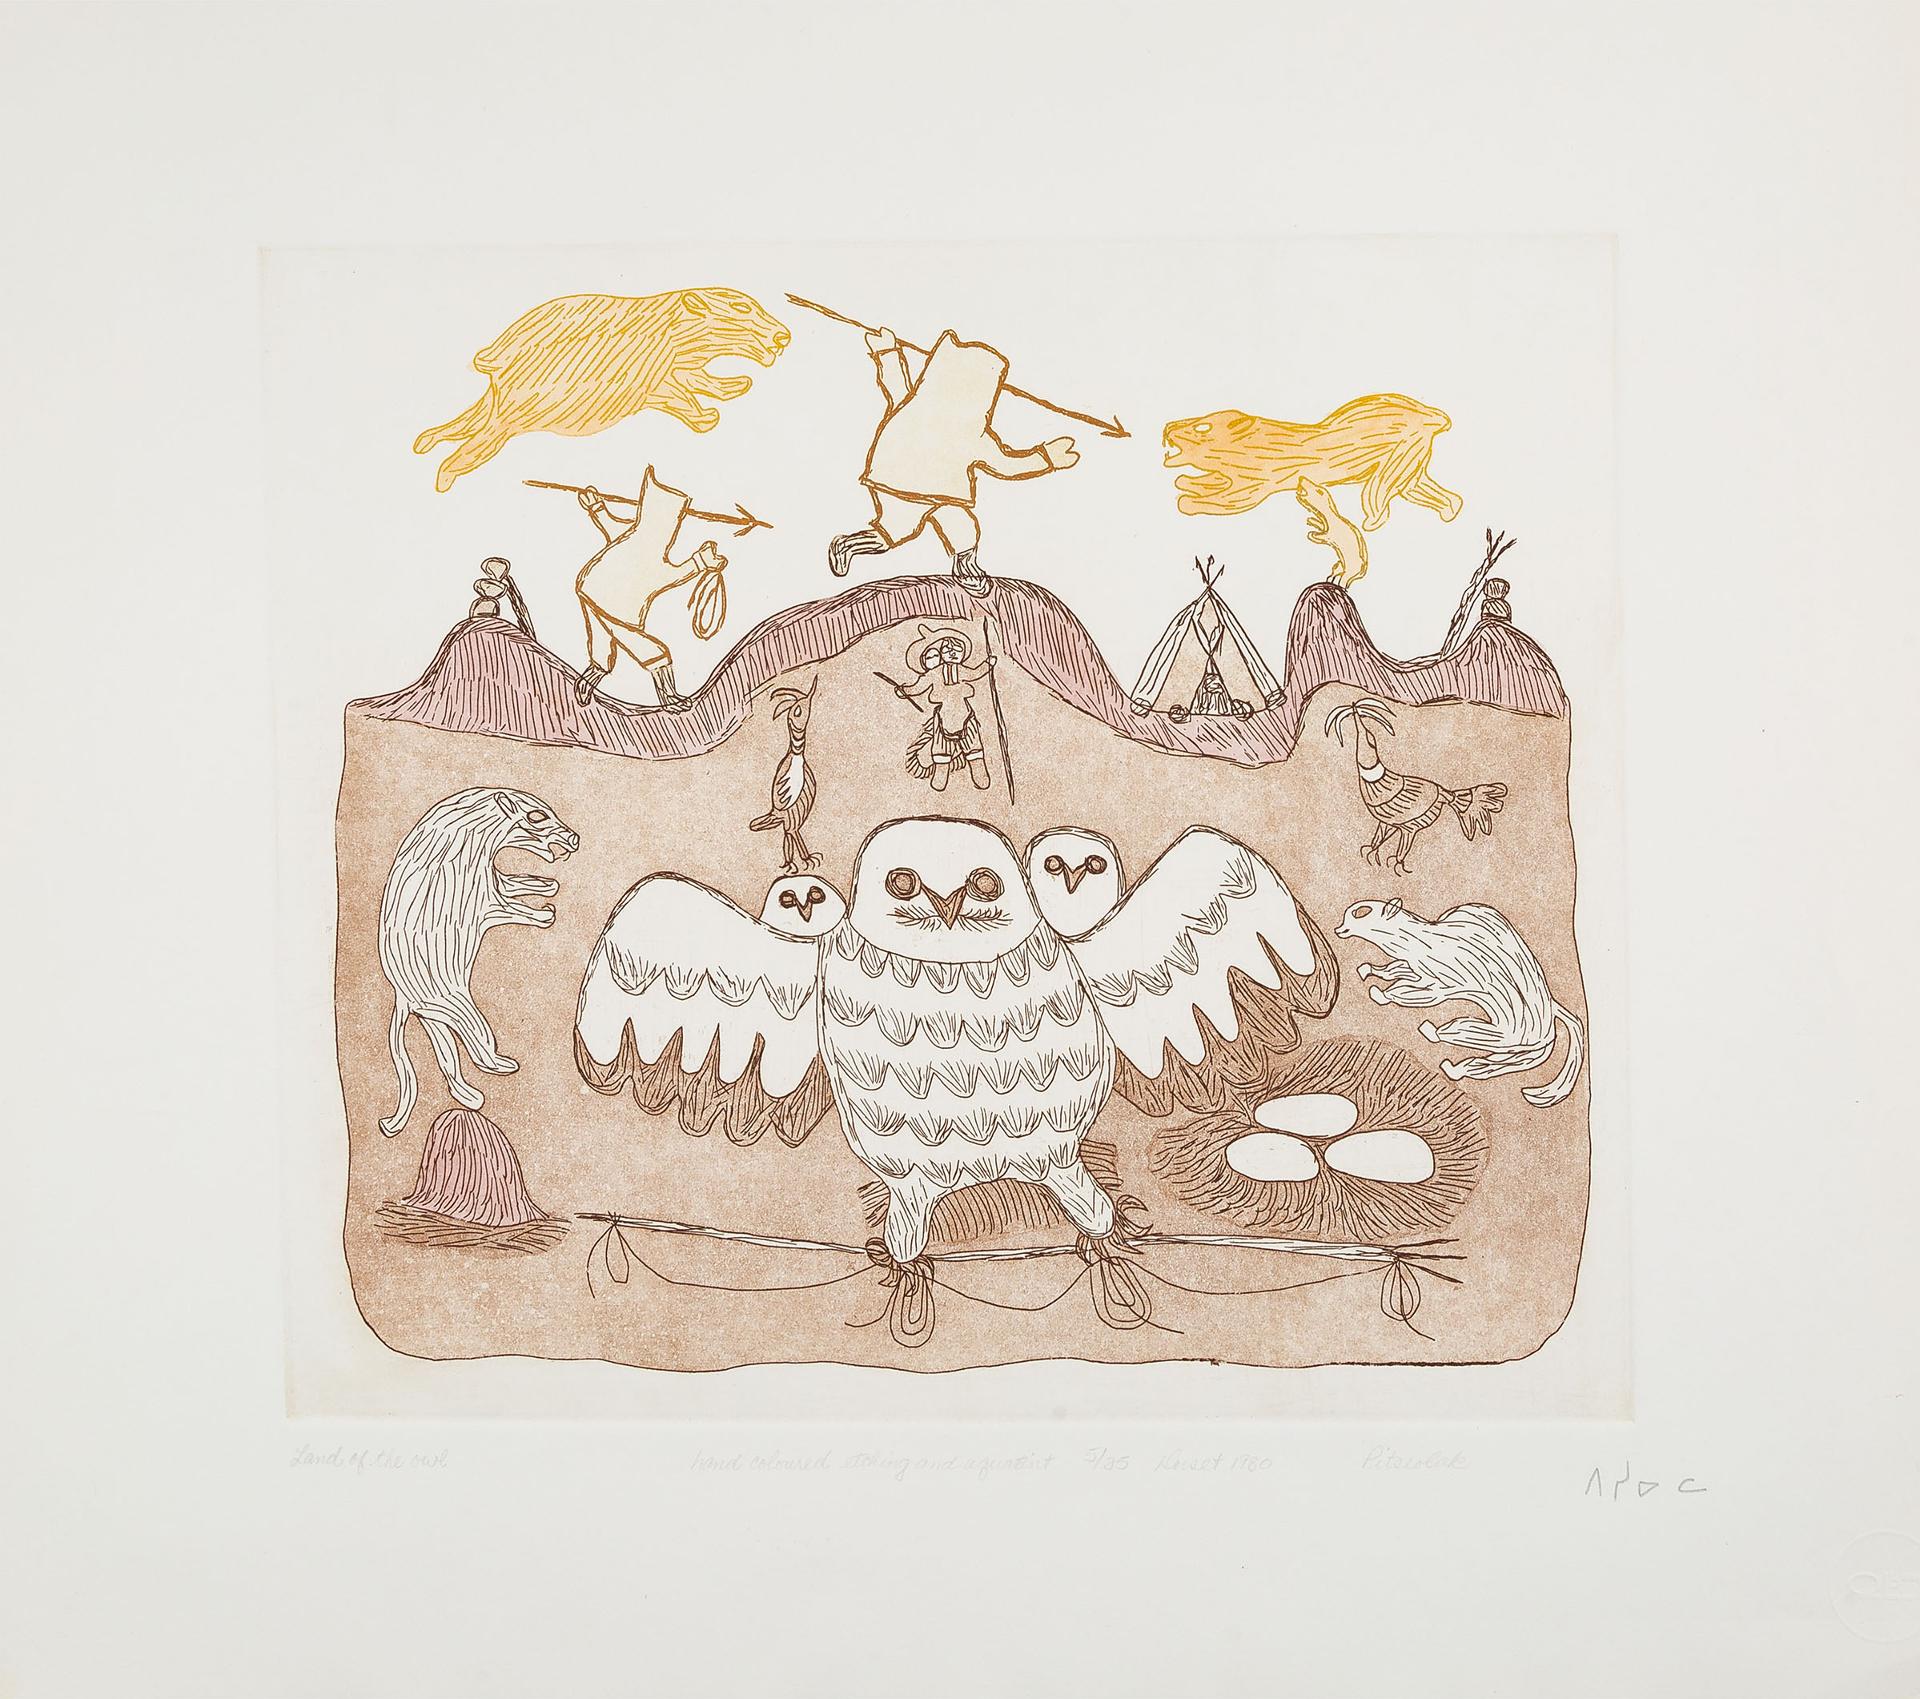 Pitseolak Ashoona (1904-1983) - Land Of The Owl